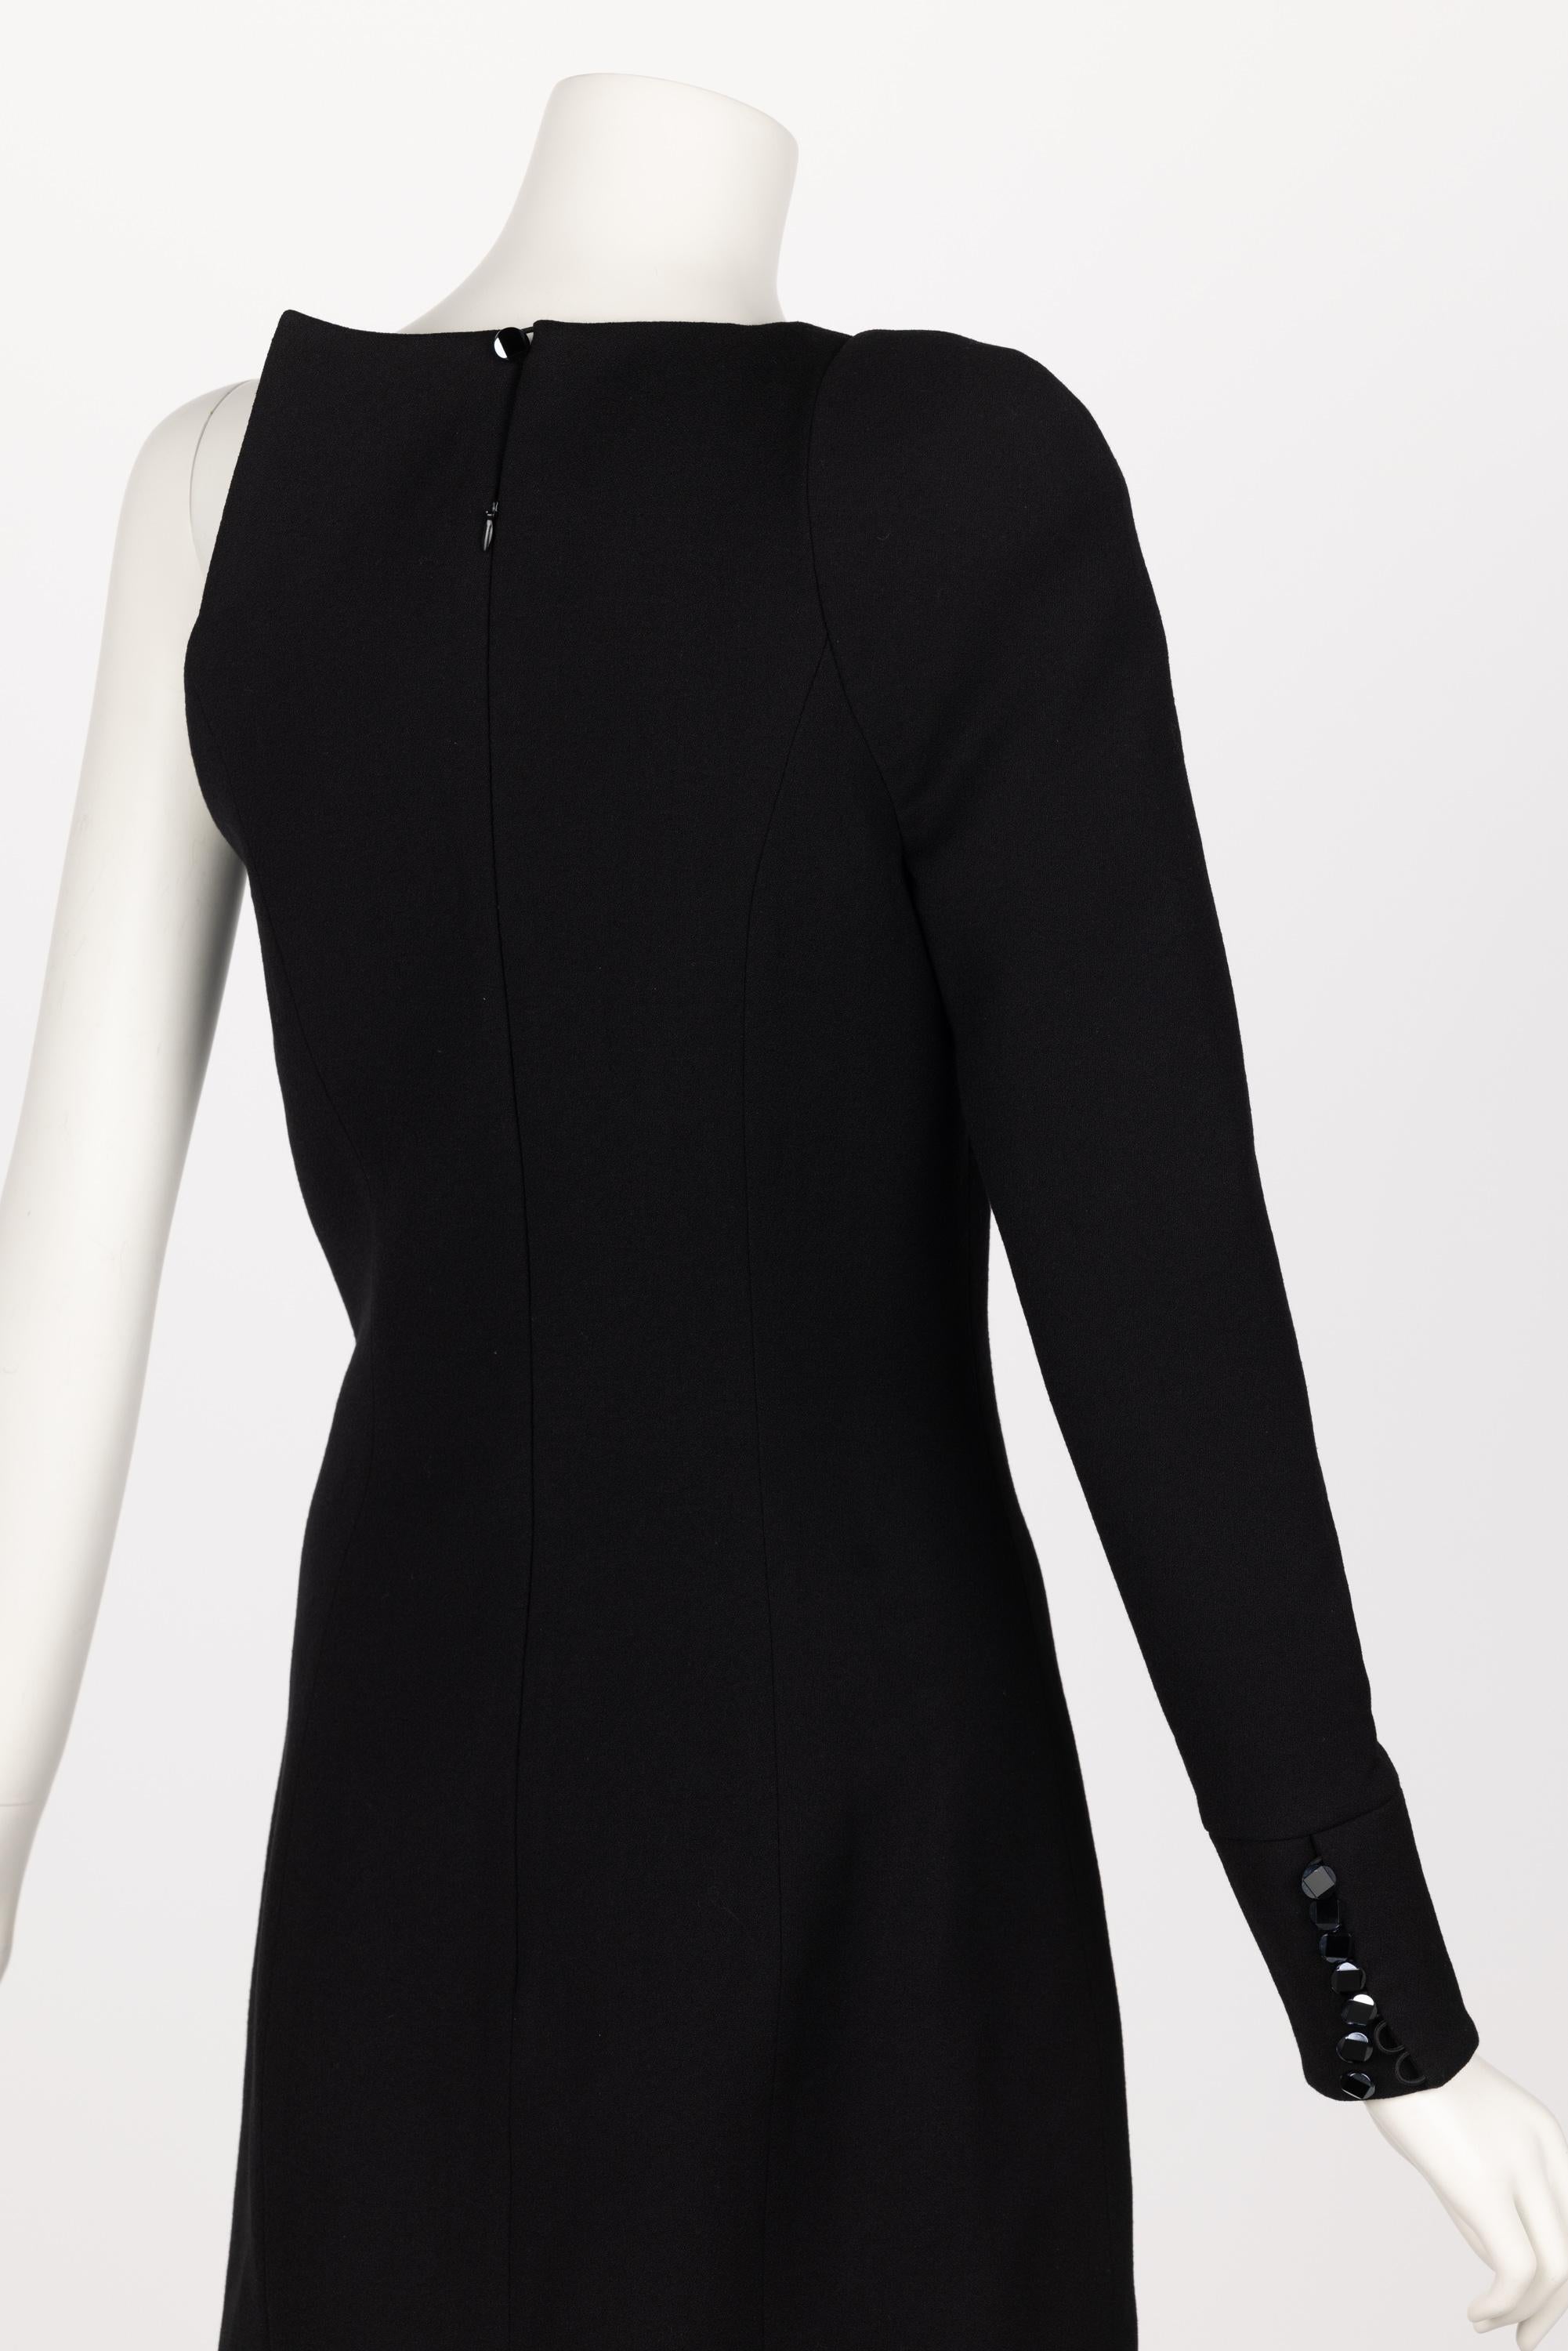 Ronald van der Kemp Demi Couture Fall 2018 Sculptural Black Dress  For Sale 3